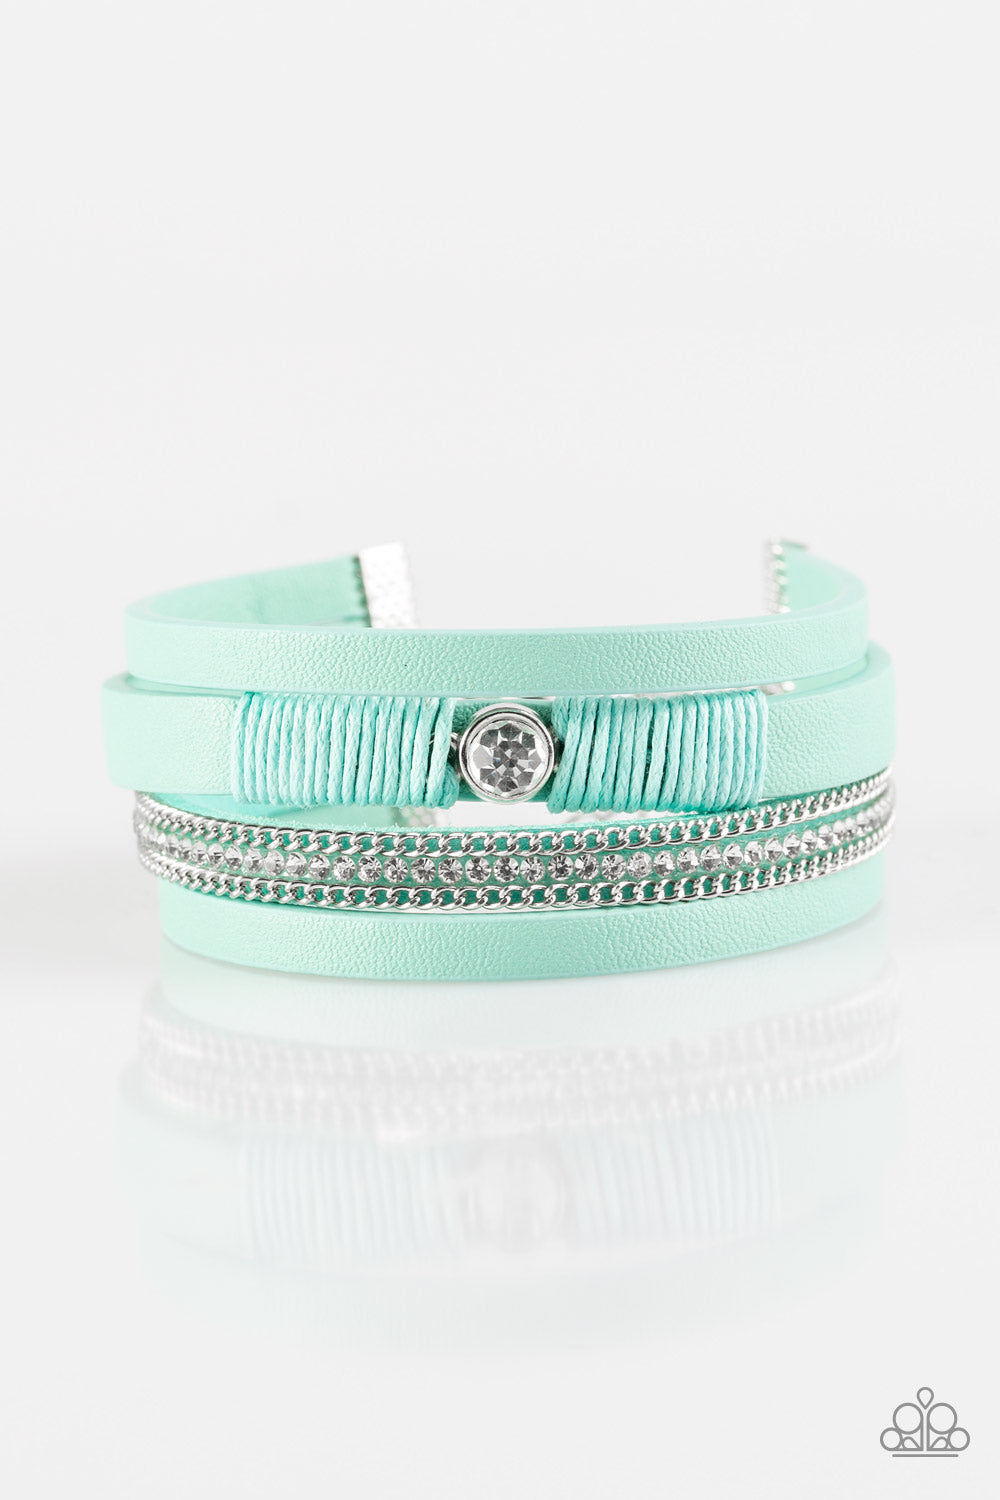 Catwalk Craze - Green wrap bracelet